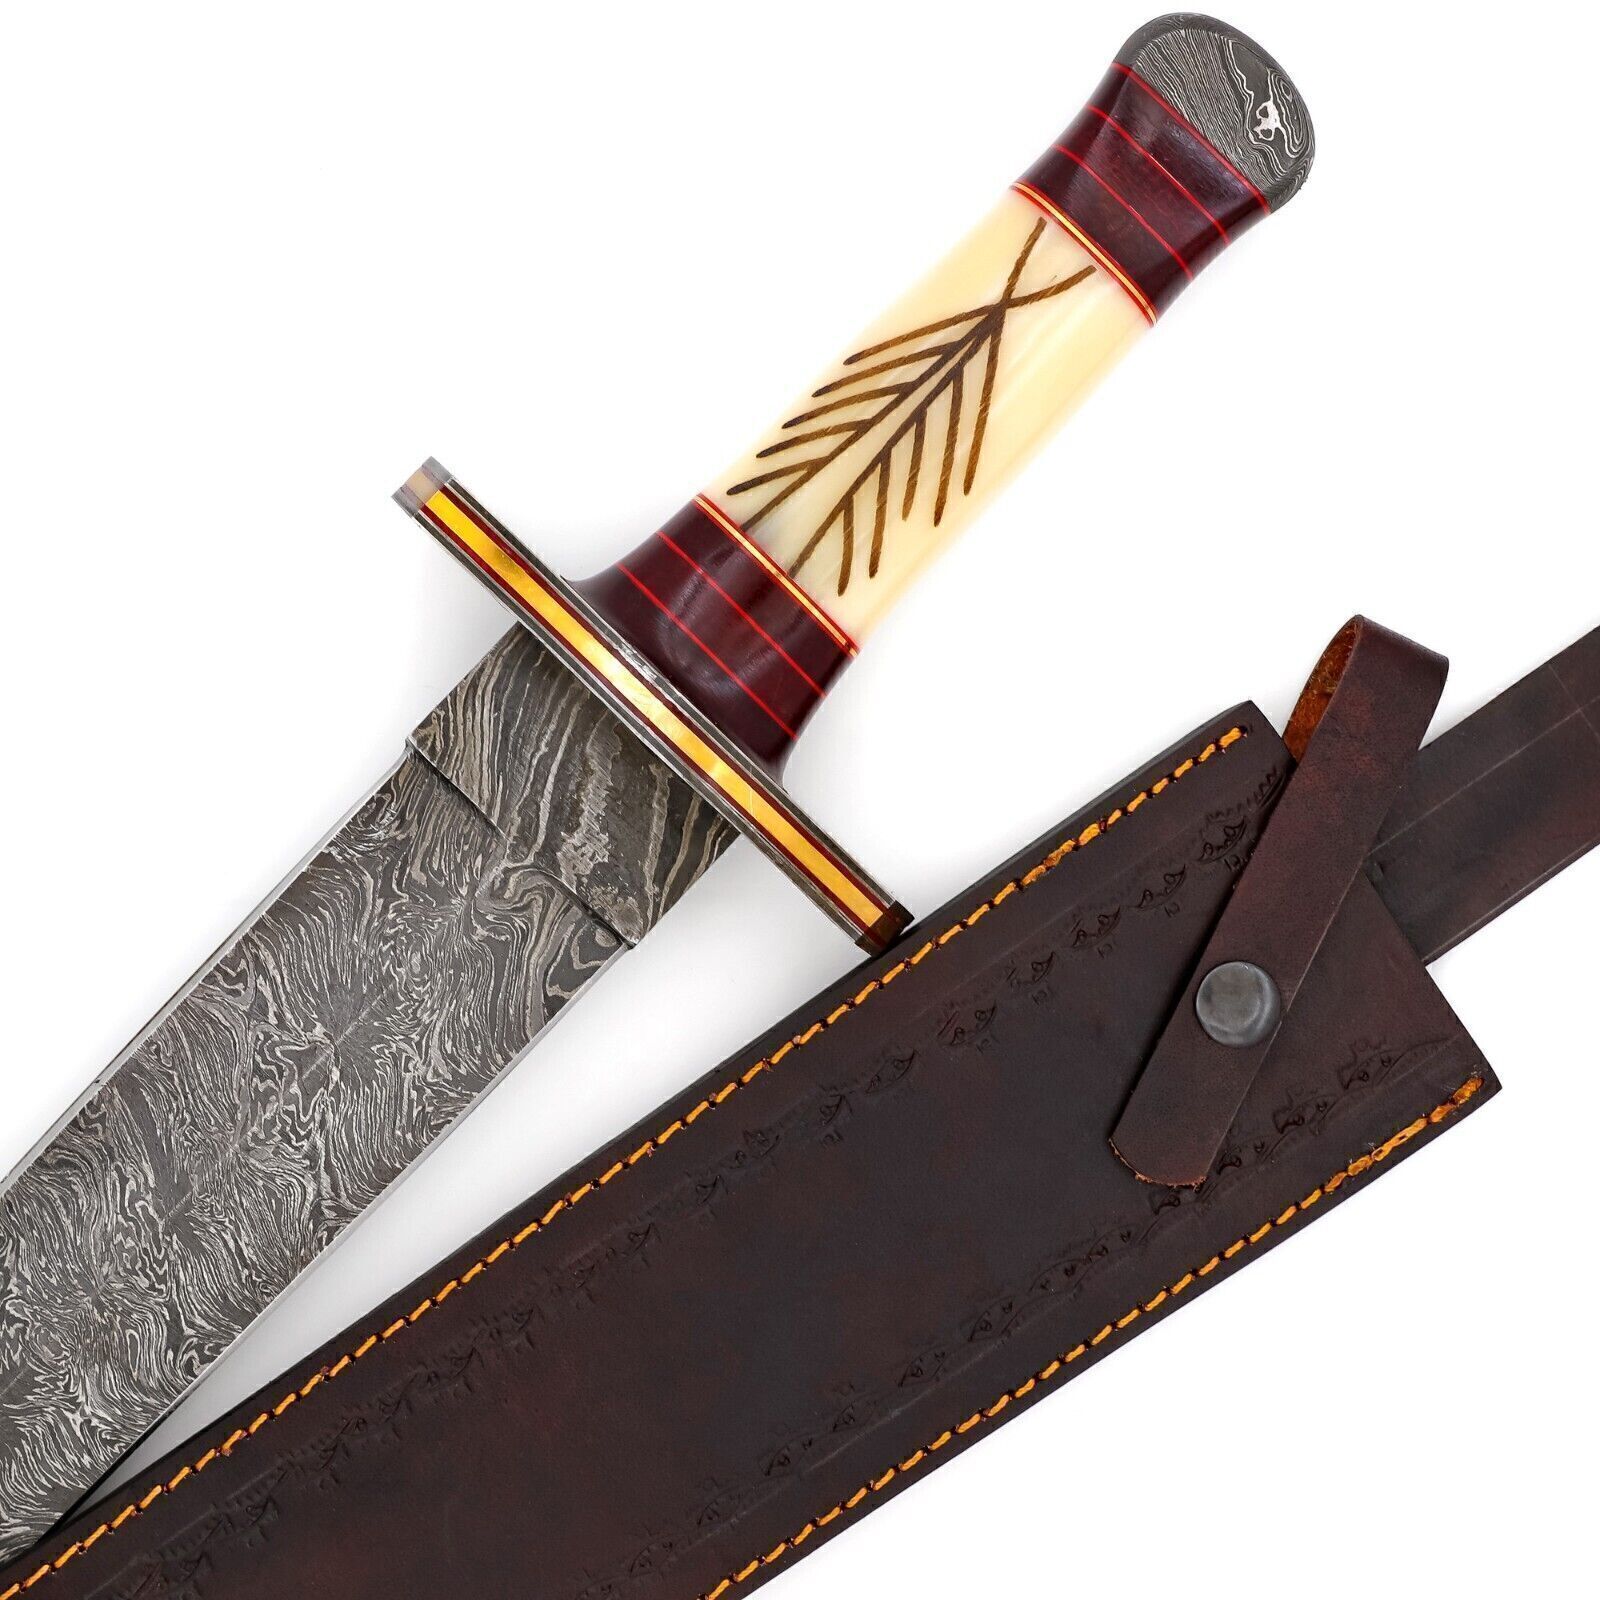 Sword in Storm Firestorm Damascus Steel Sword - HandForged Viking Inspired Sword